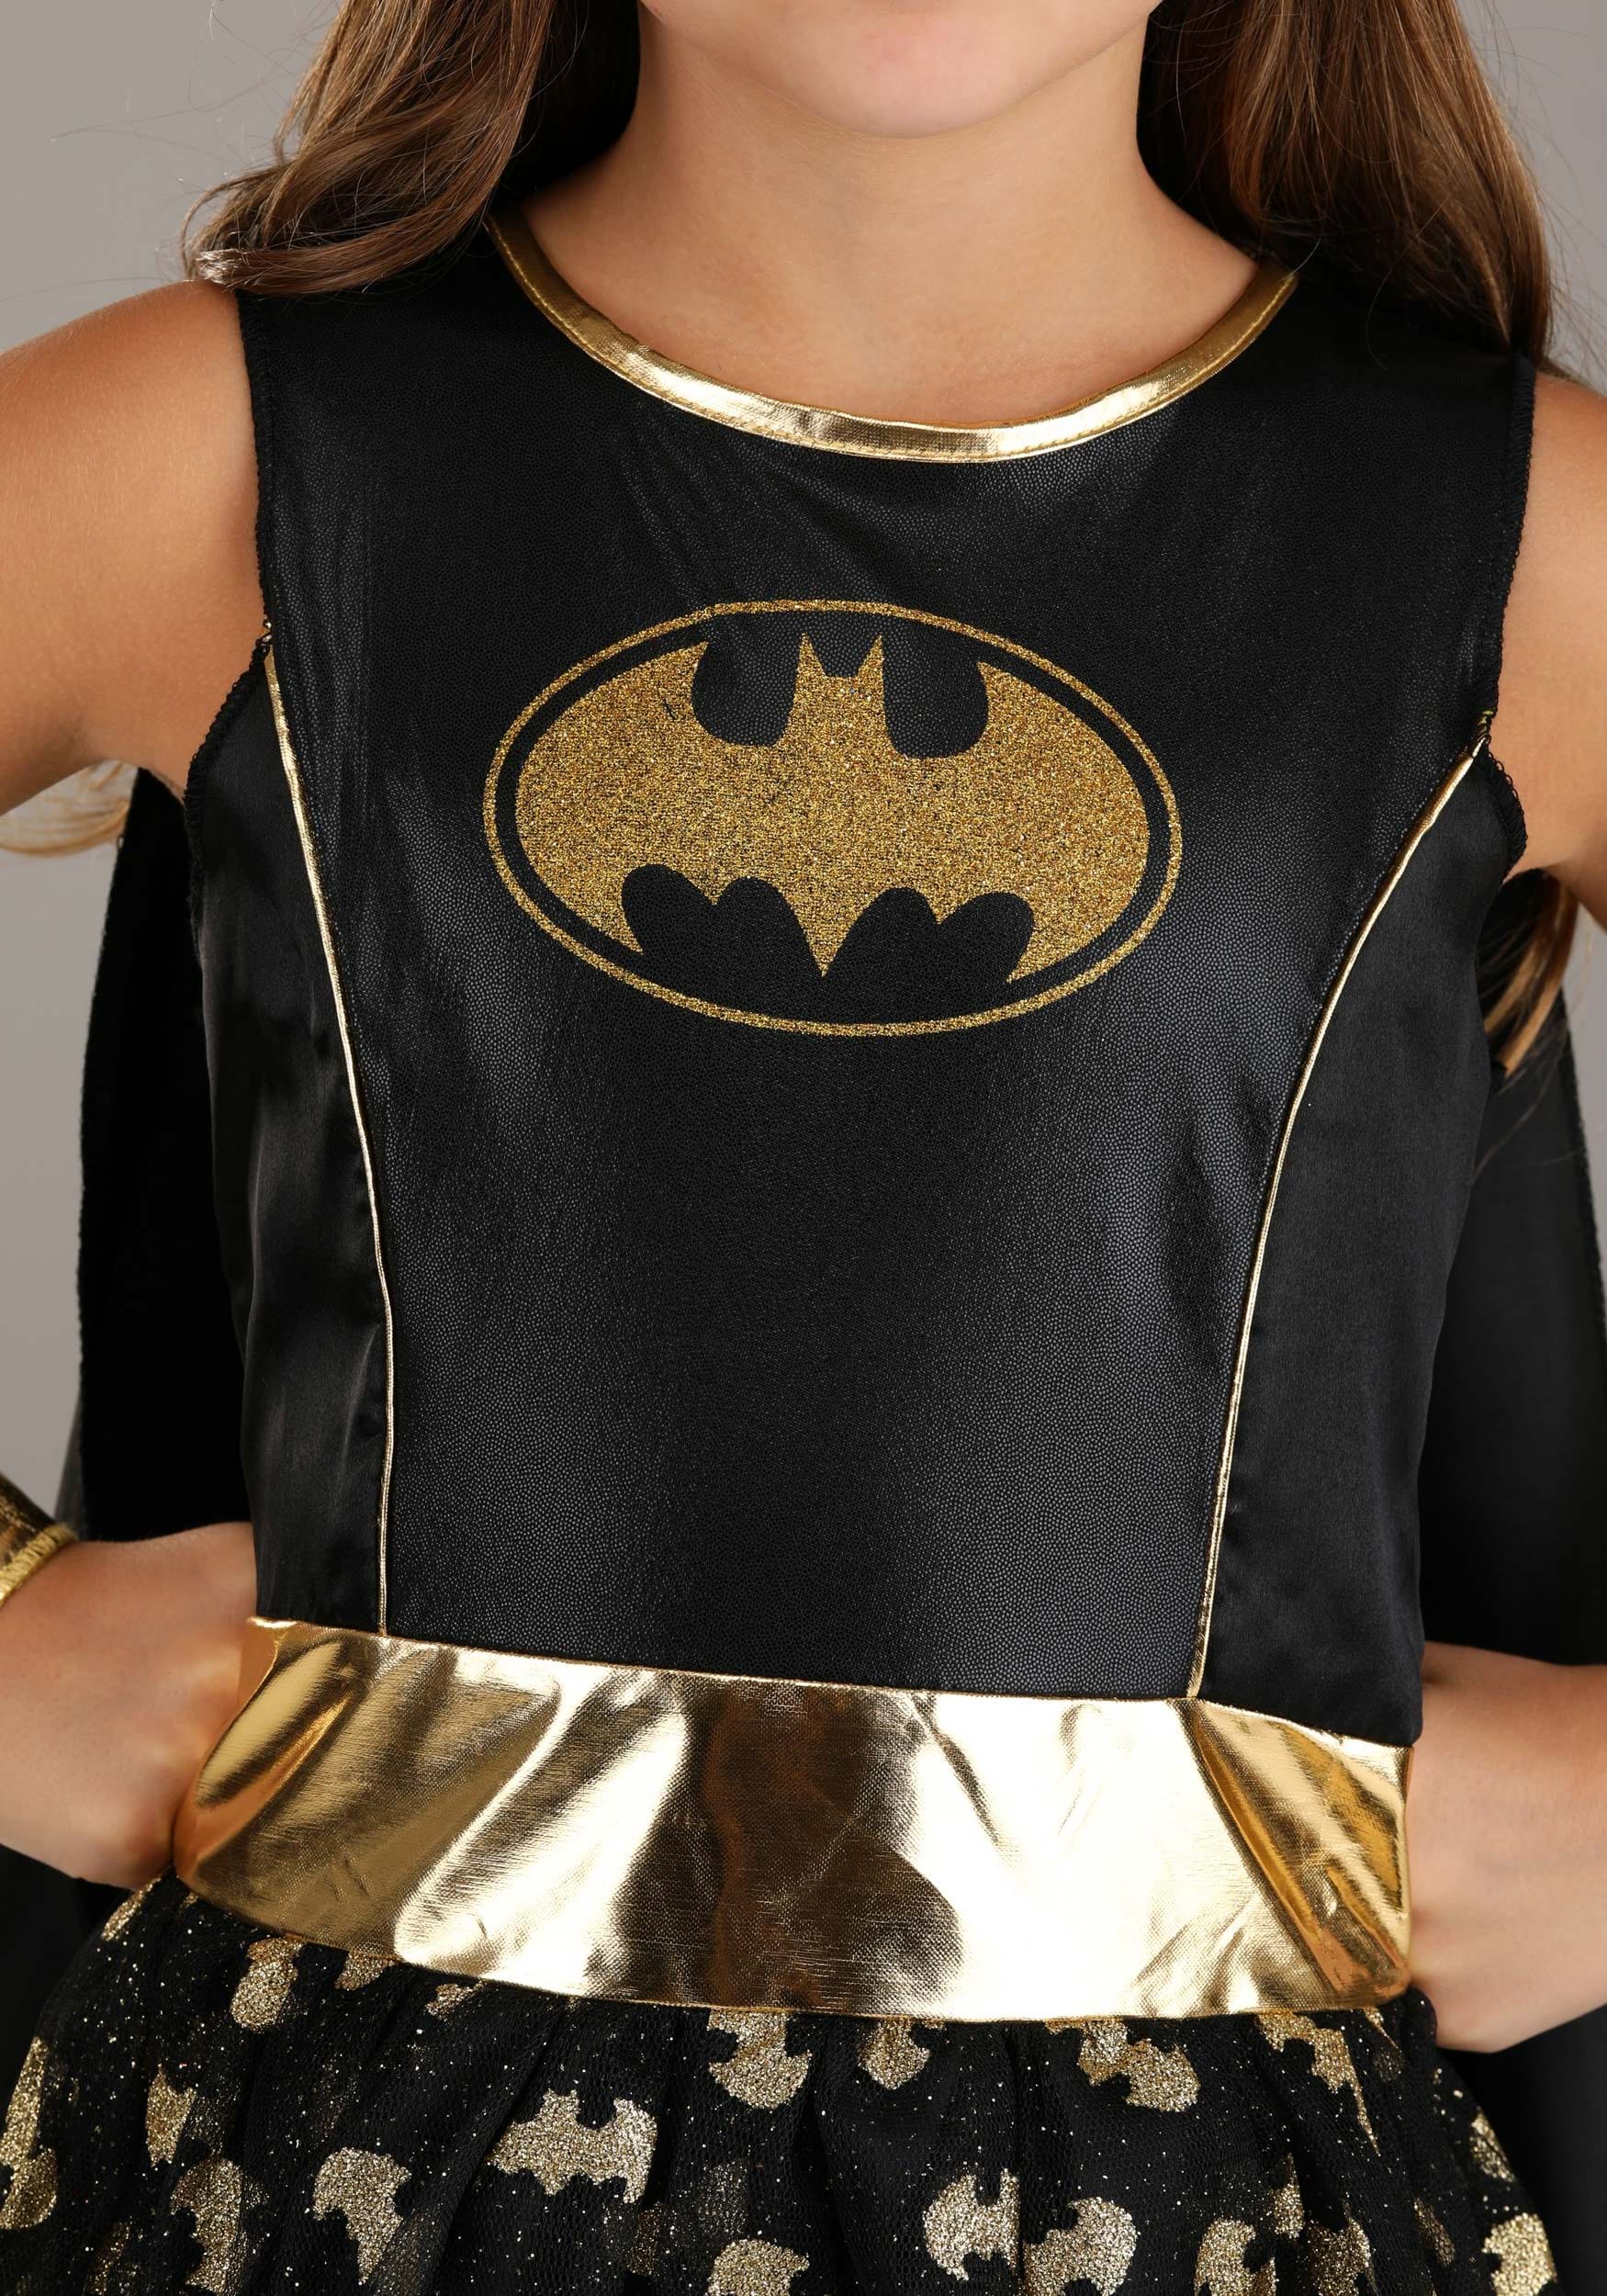 Brilliant Batgirl Child Costume